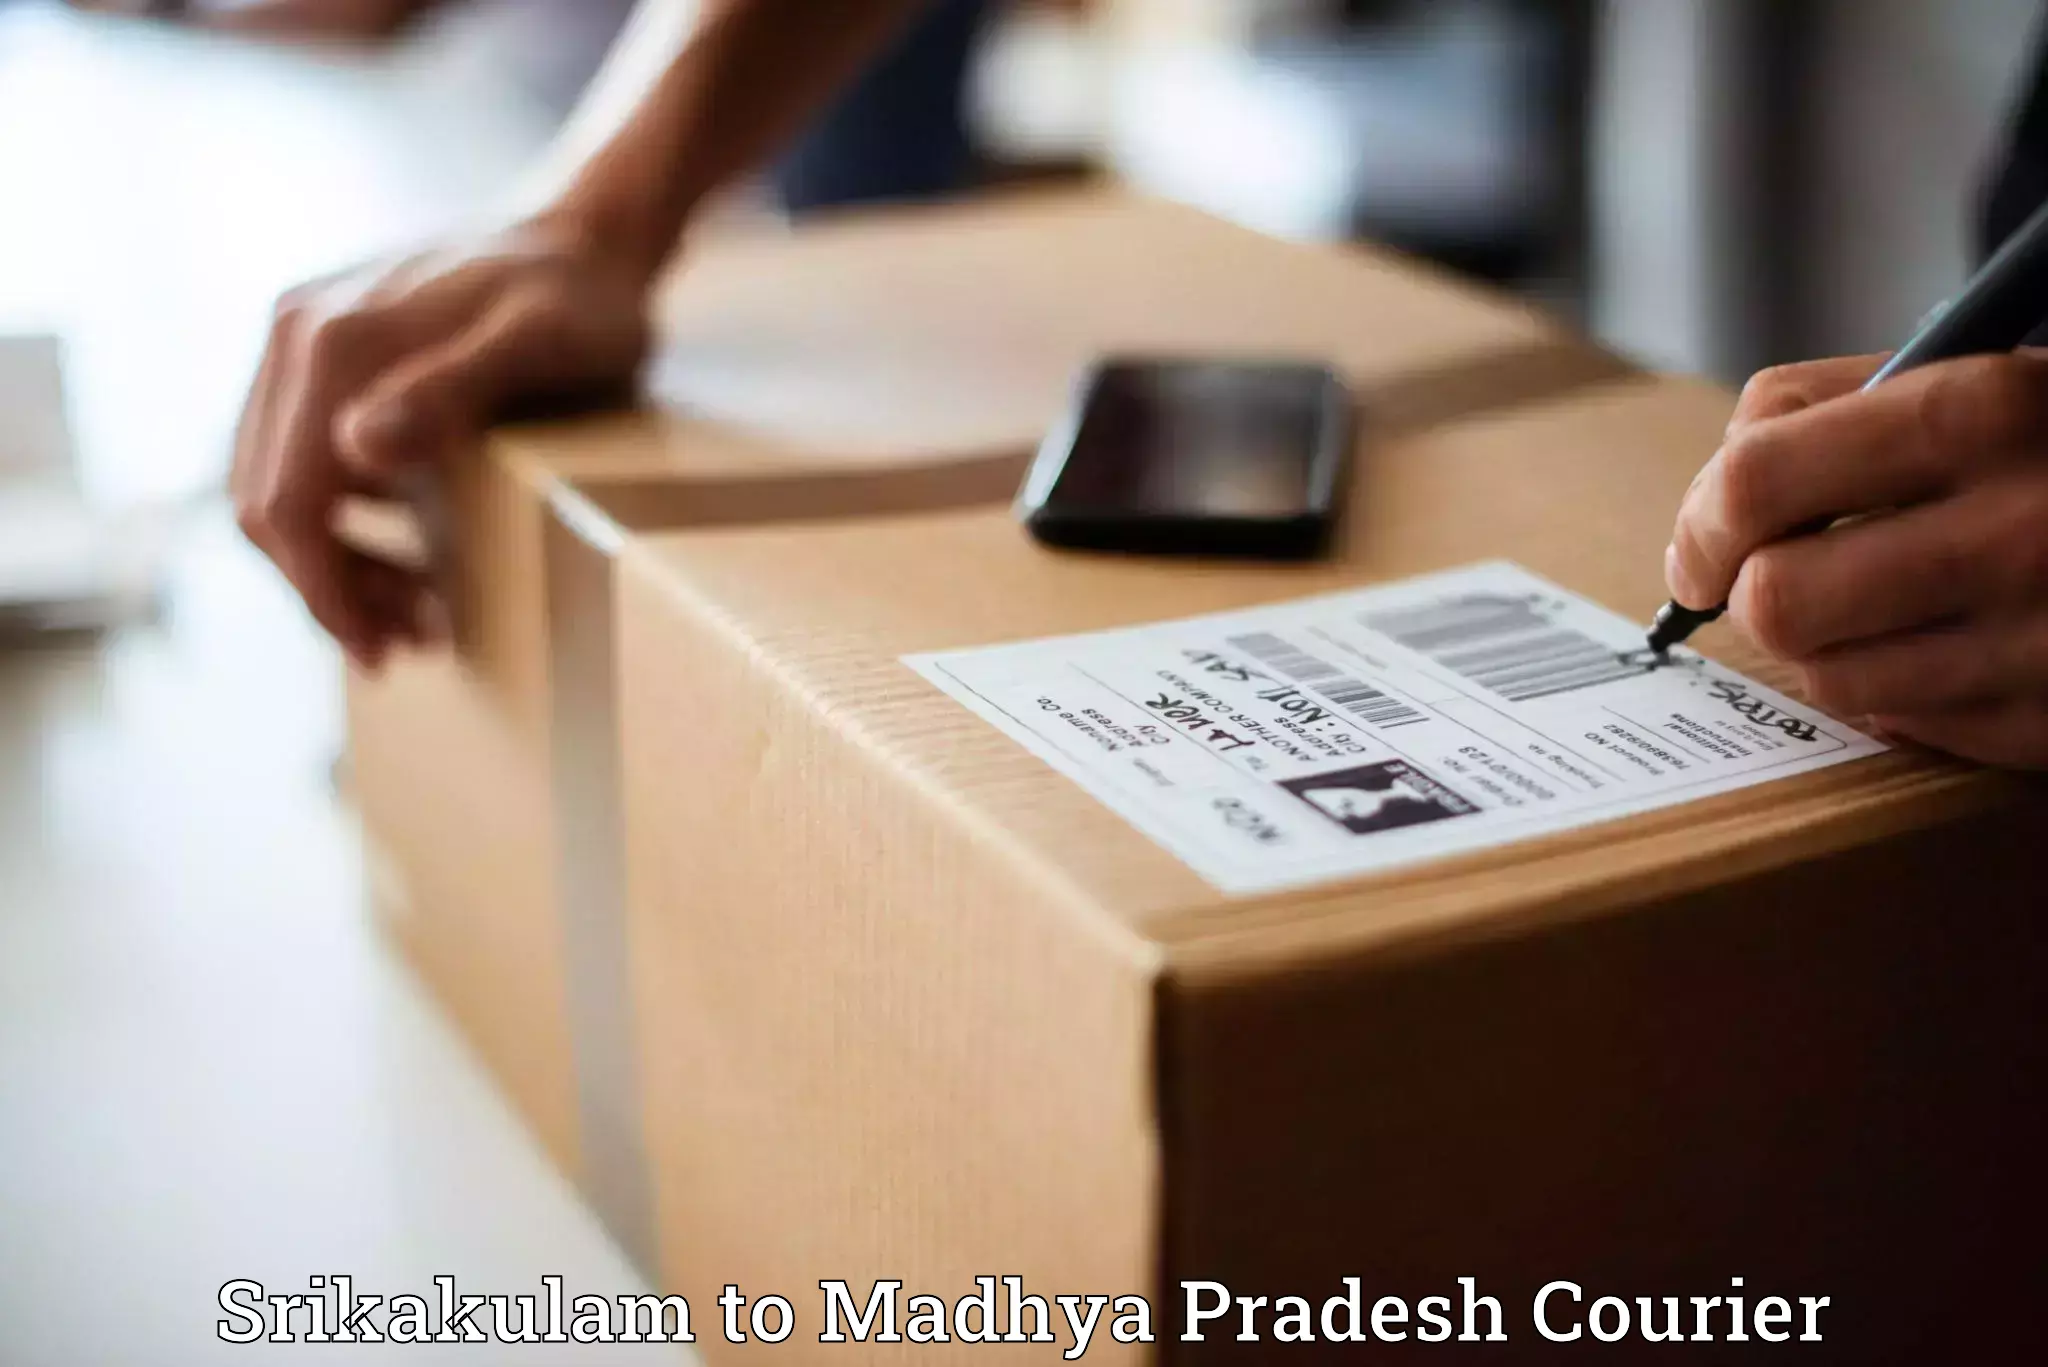 Bulk courier orders Srikakulam to Hoshangabad